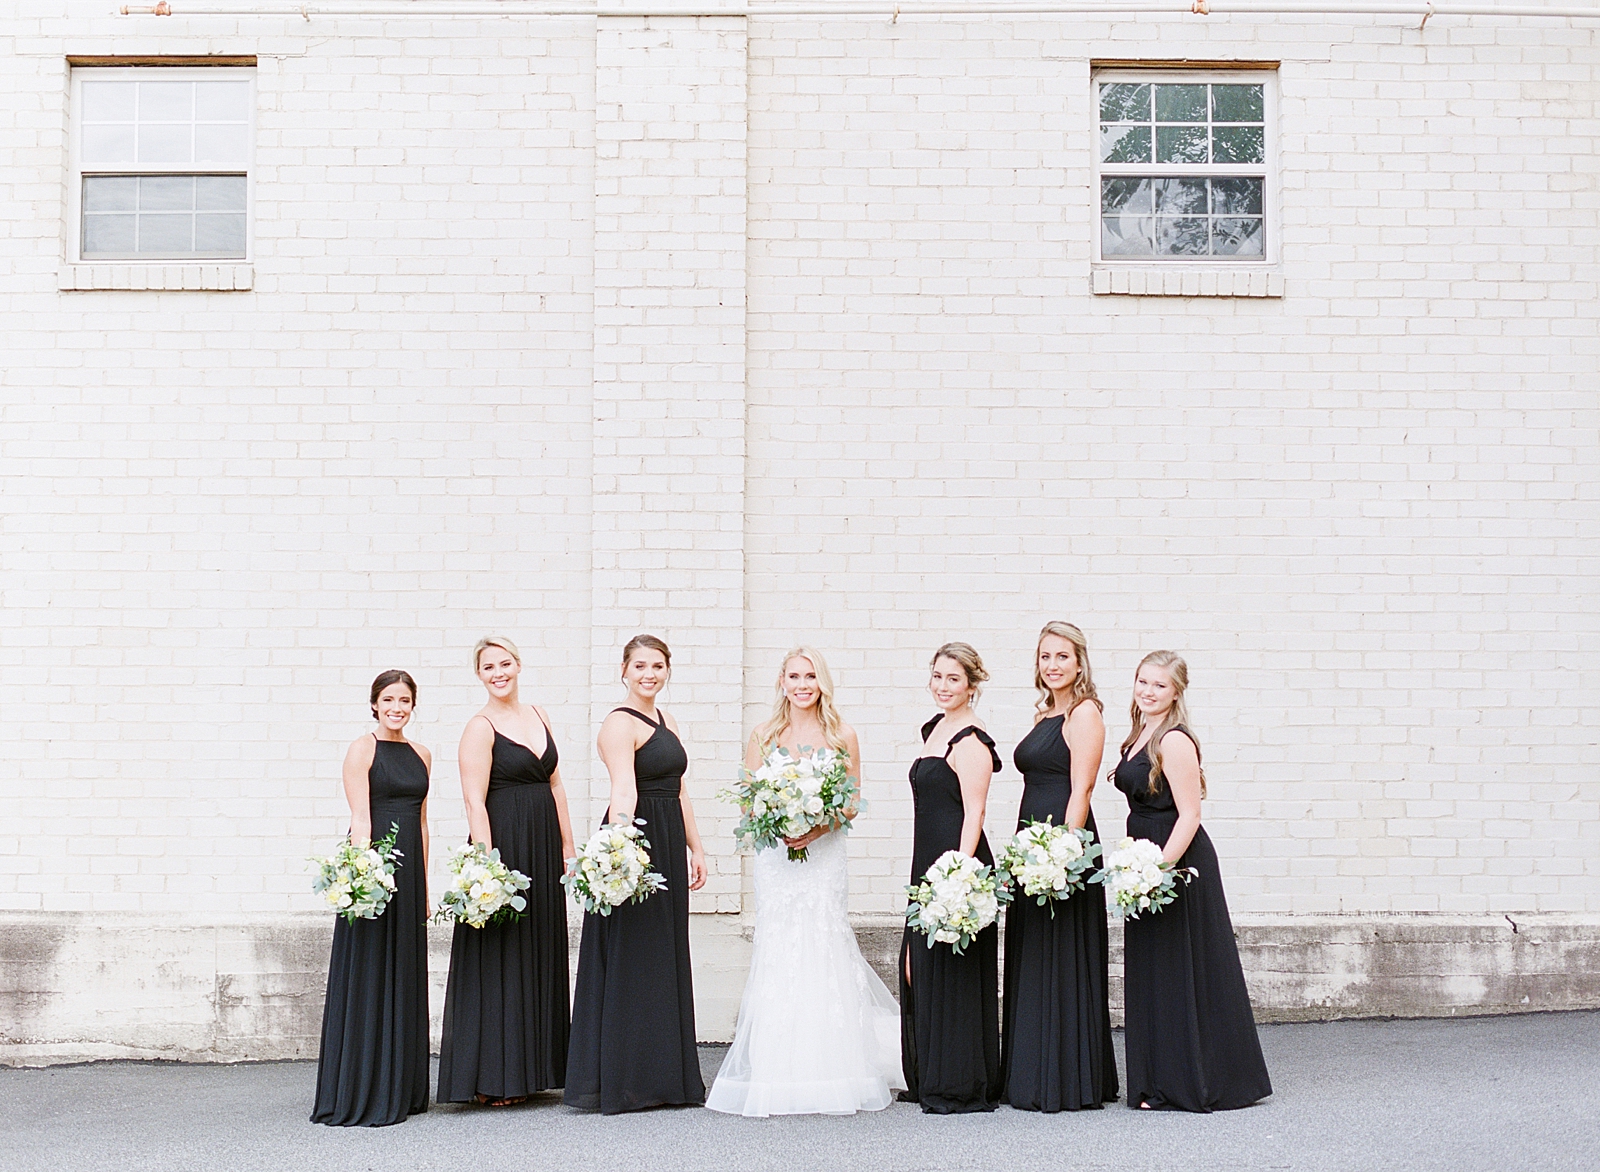 Glover Park Brewery Wedding Bridesmaids in Black Dresses Photo